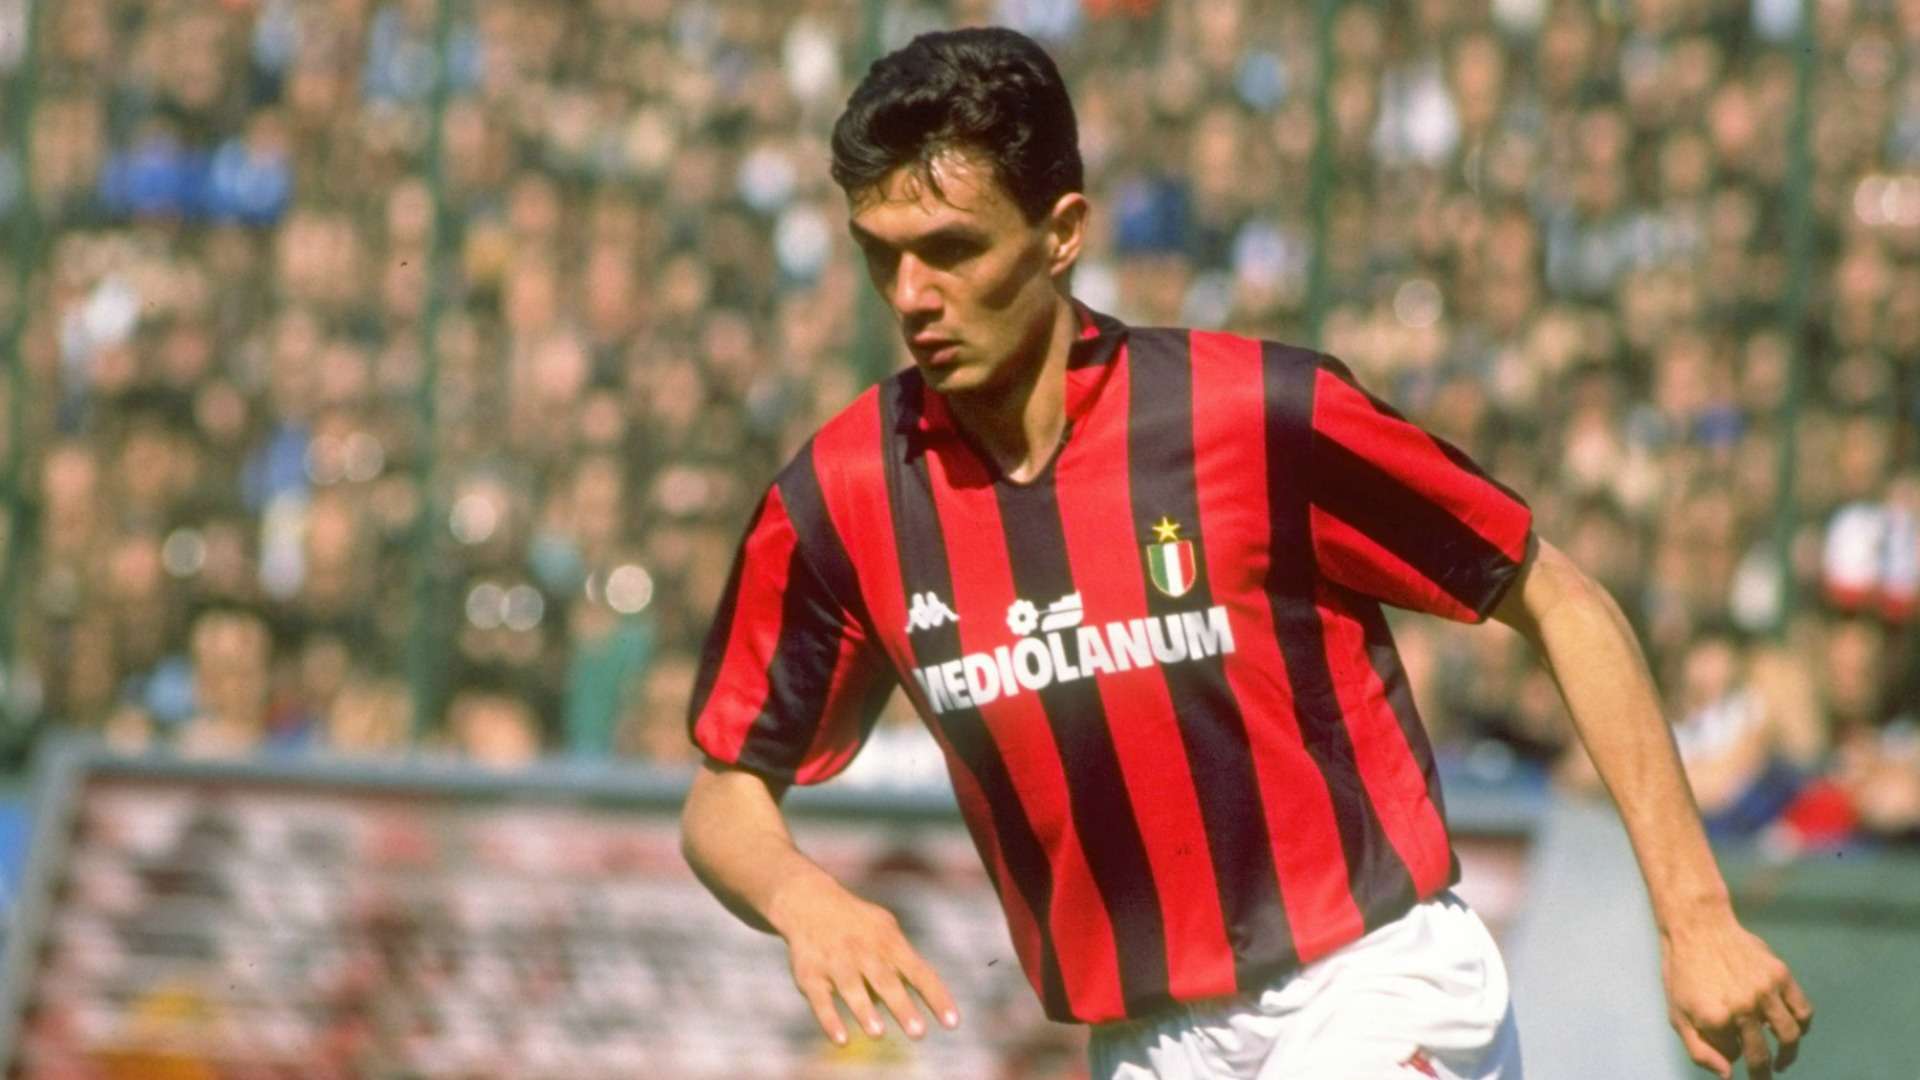 Paolo Maldini AC Milan 1990